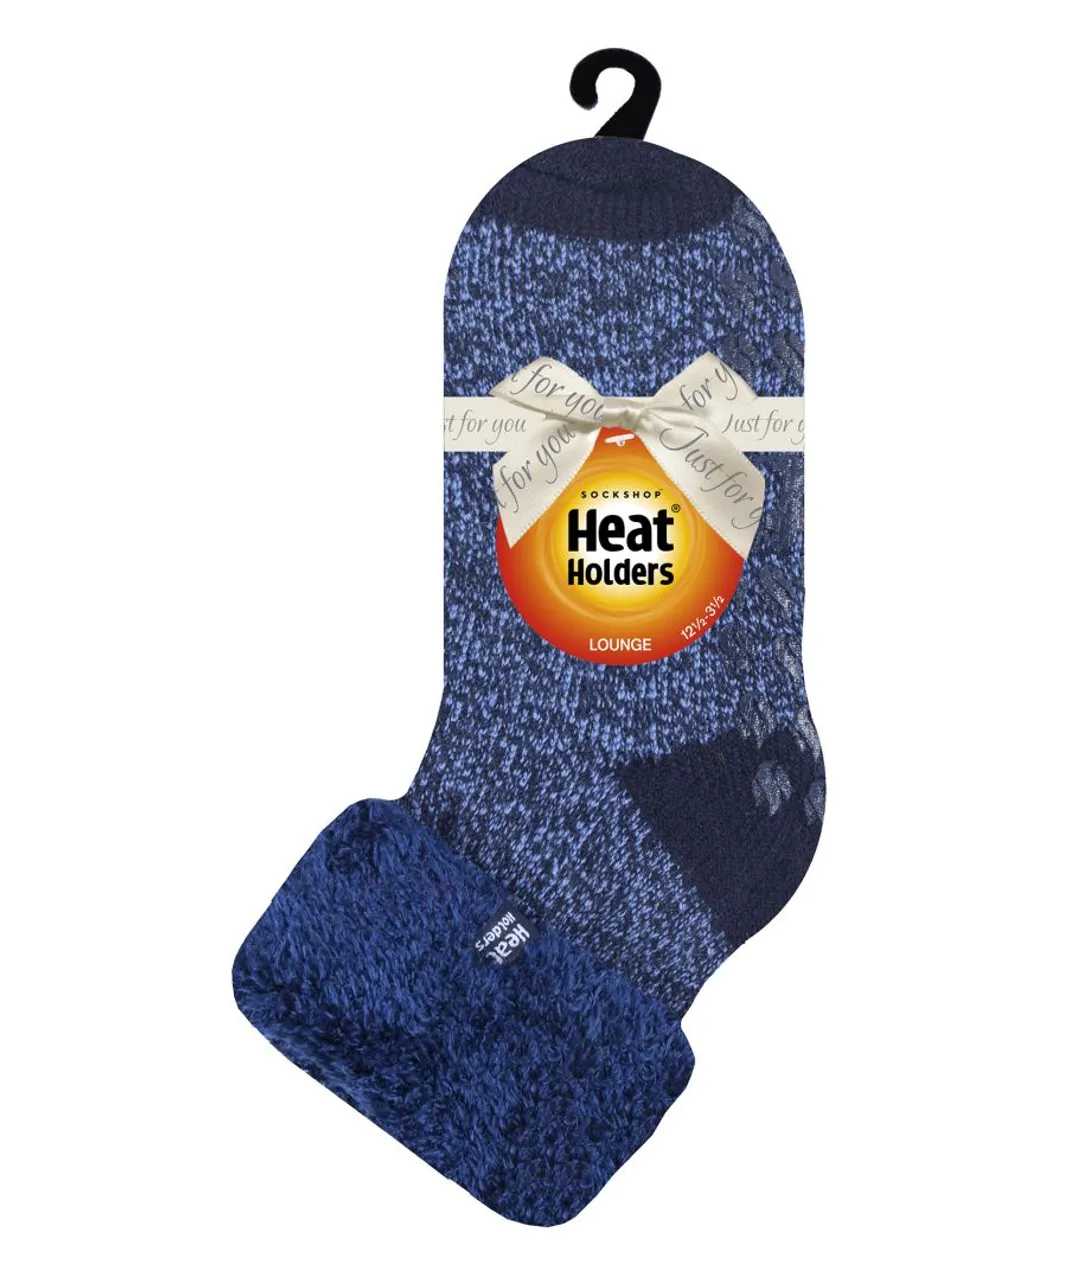 Heat Holders Unisex Kids Fluffy Bed Socks